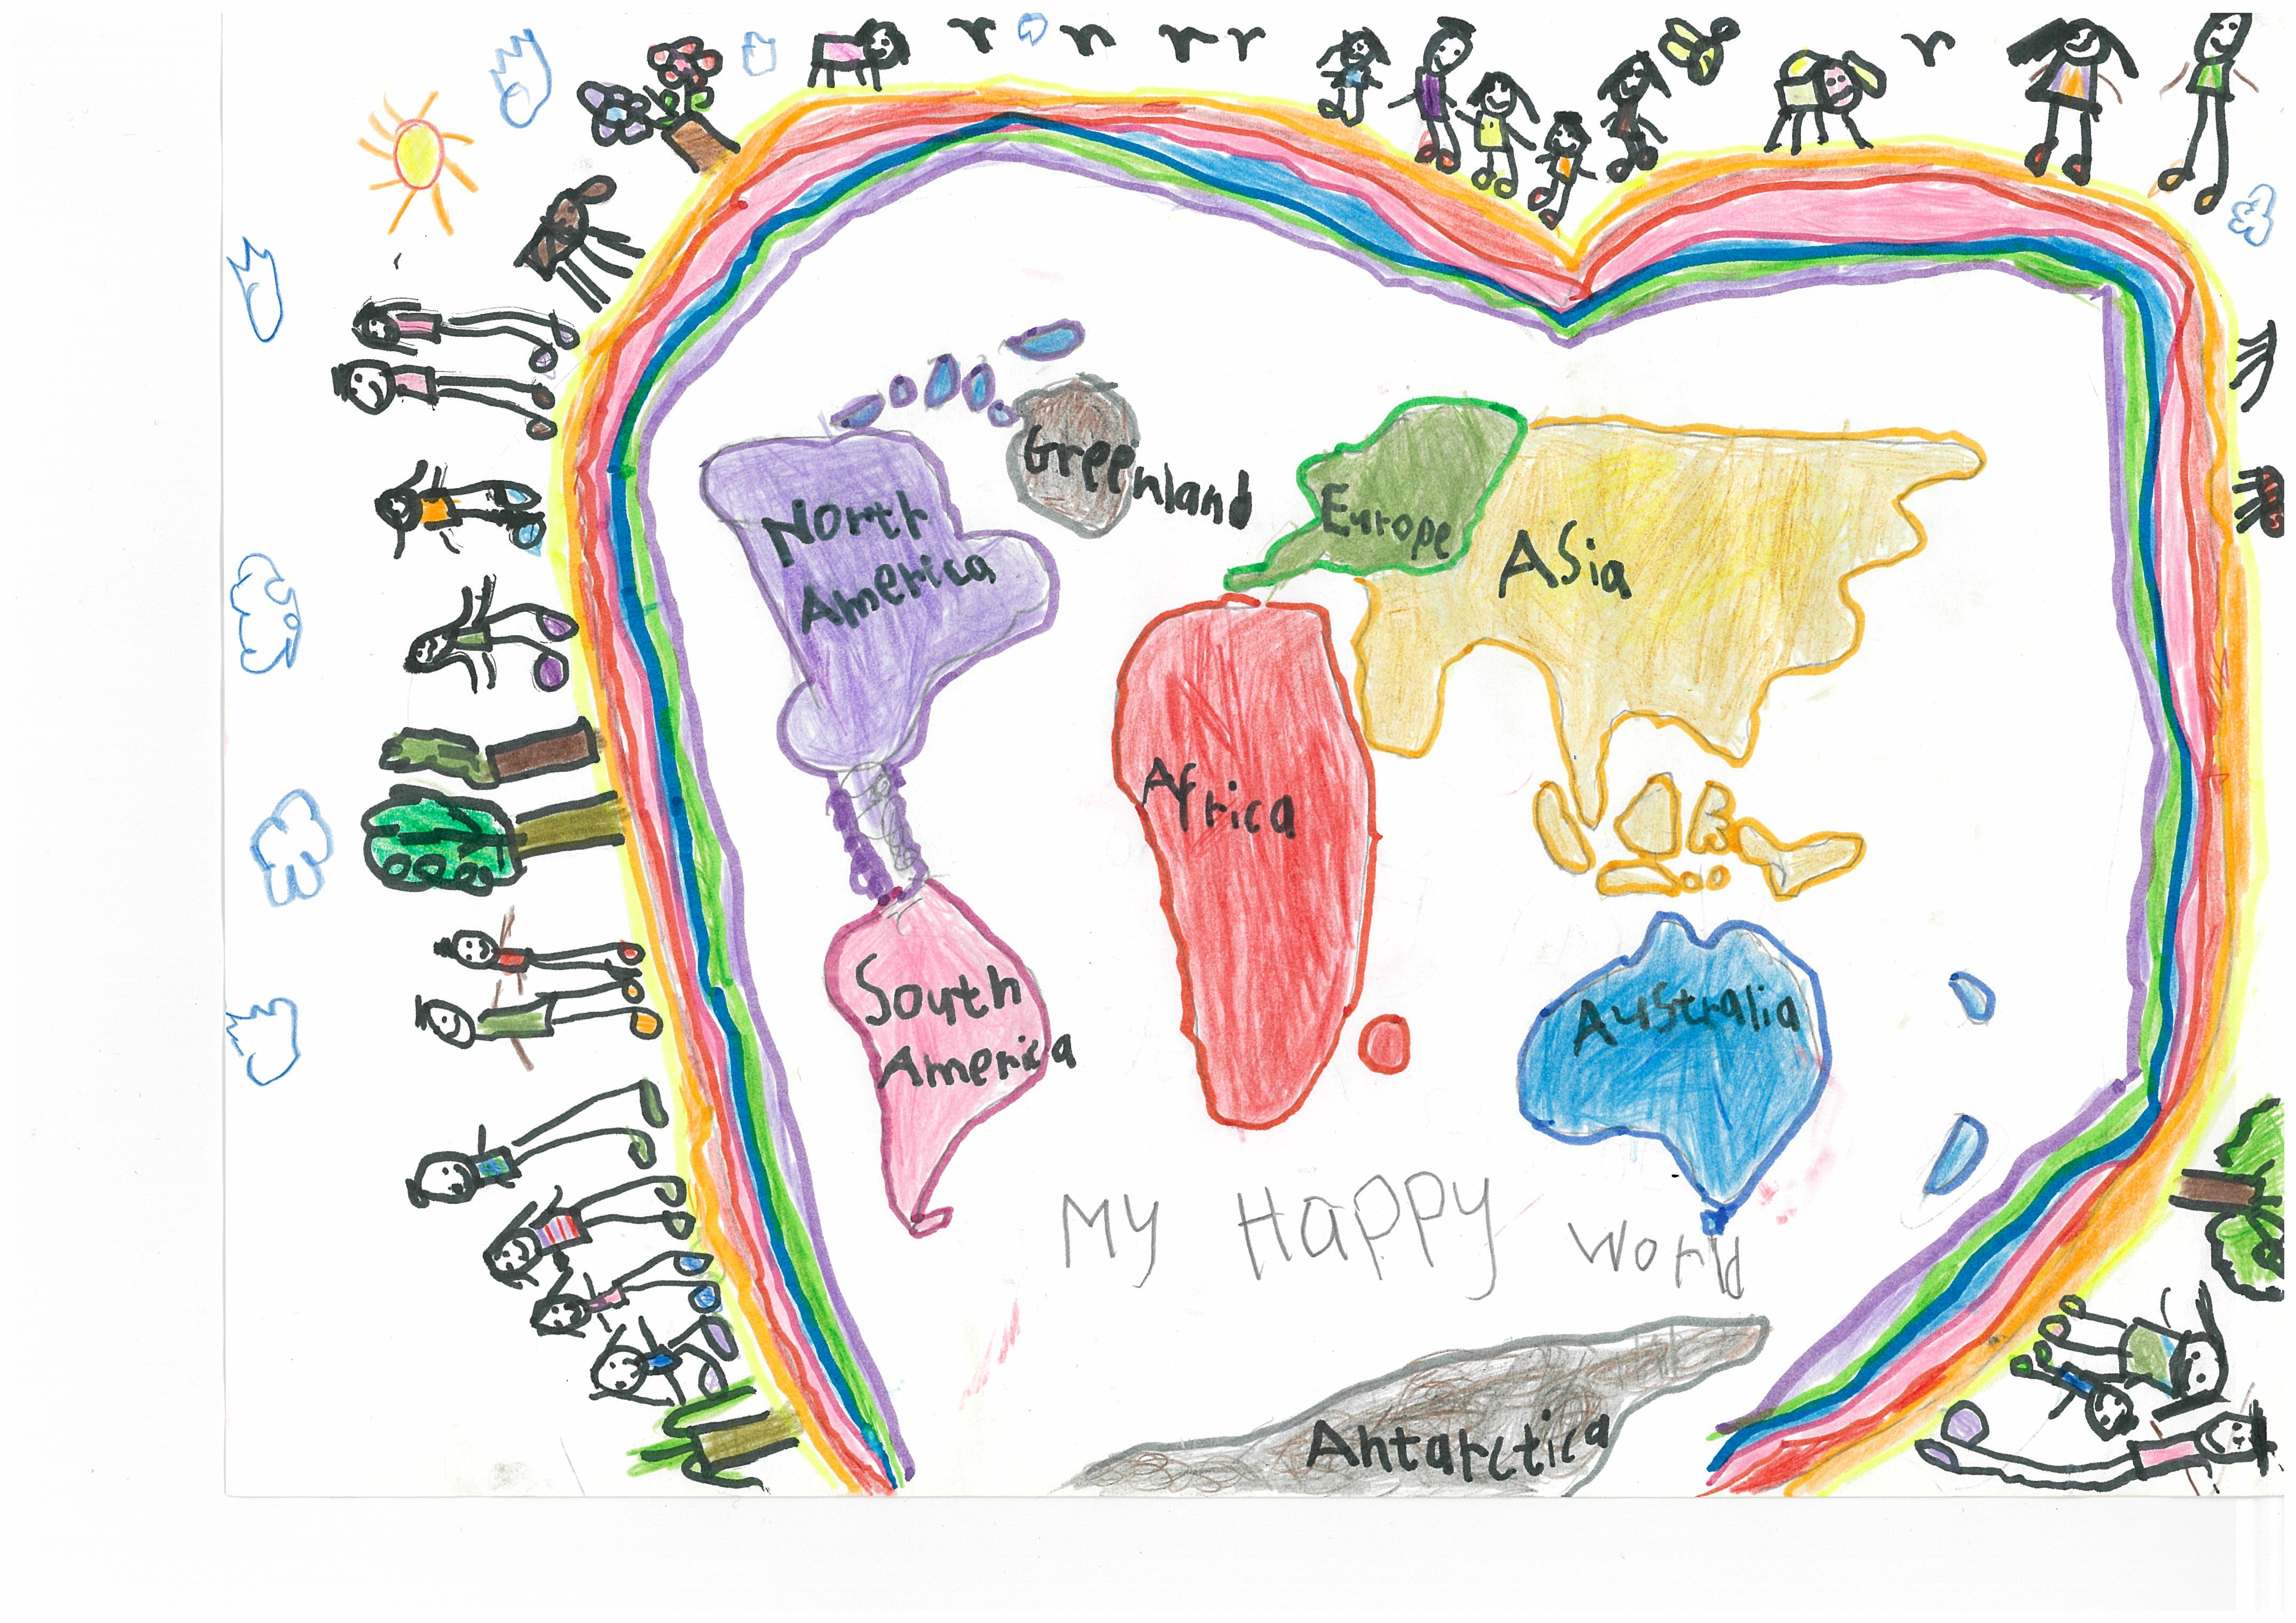 01 - My Happy World
Alicia Fleming - Age 5